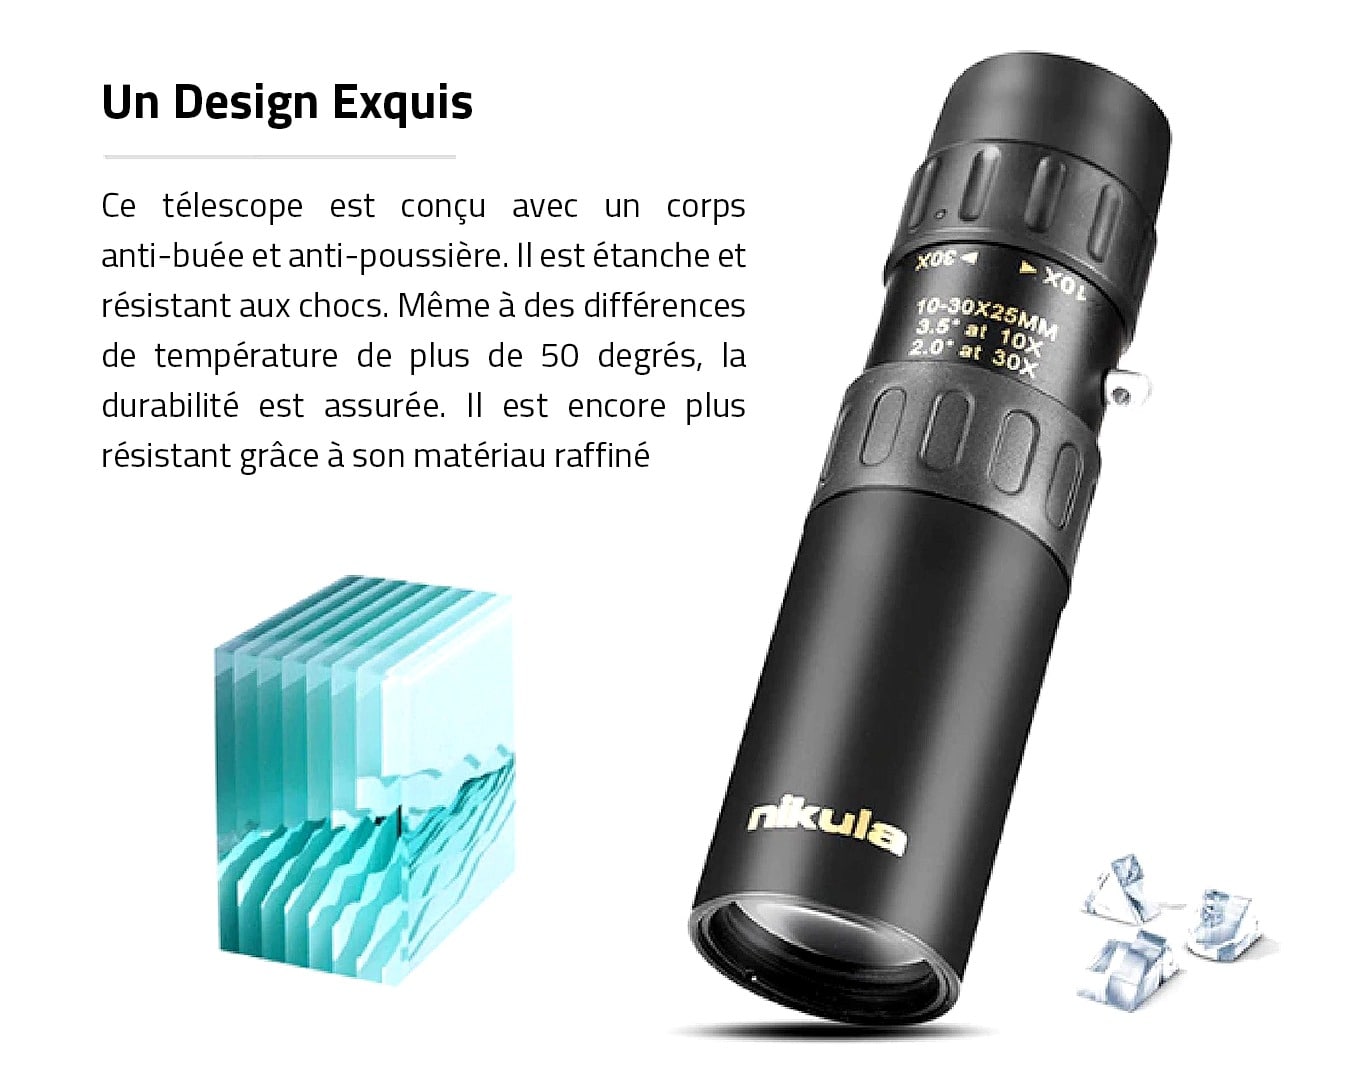 Z-478 Nikula Télescope - Un Design Exquis